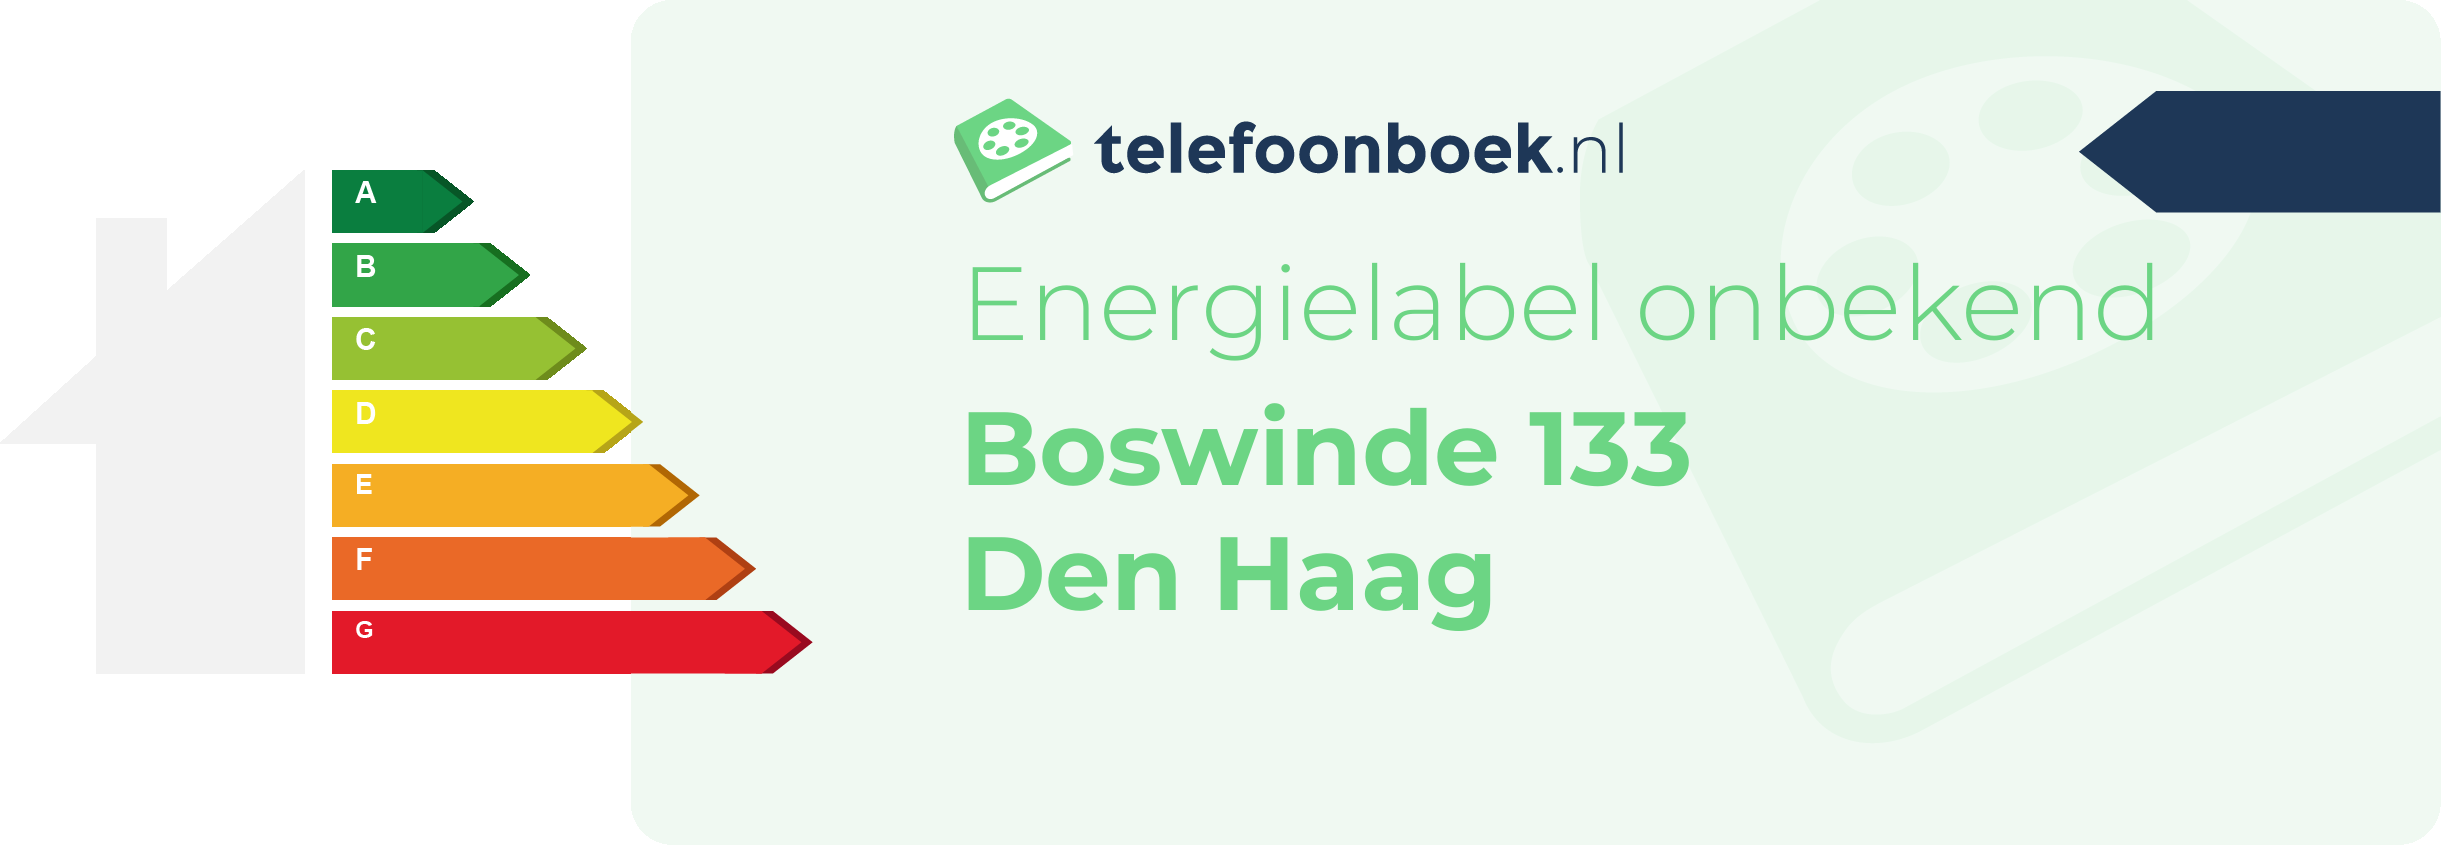 Energielabel Boswinde 133 Den Haag